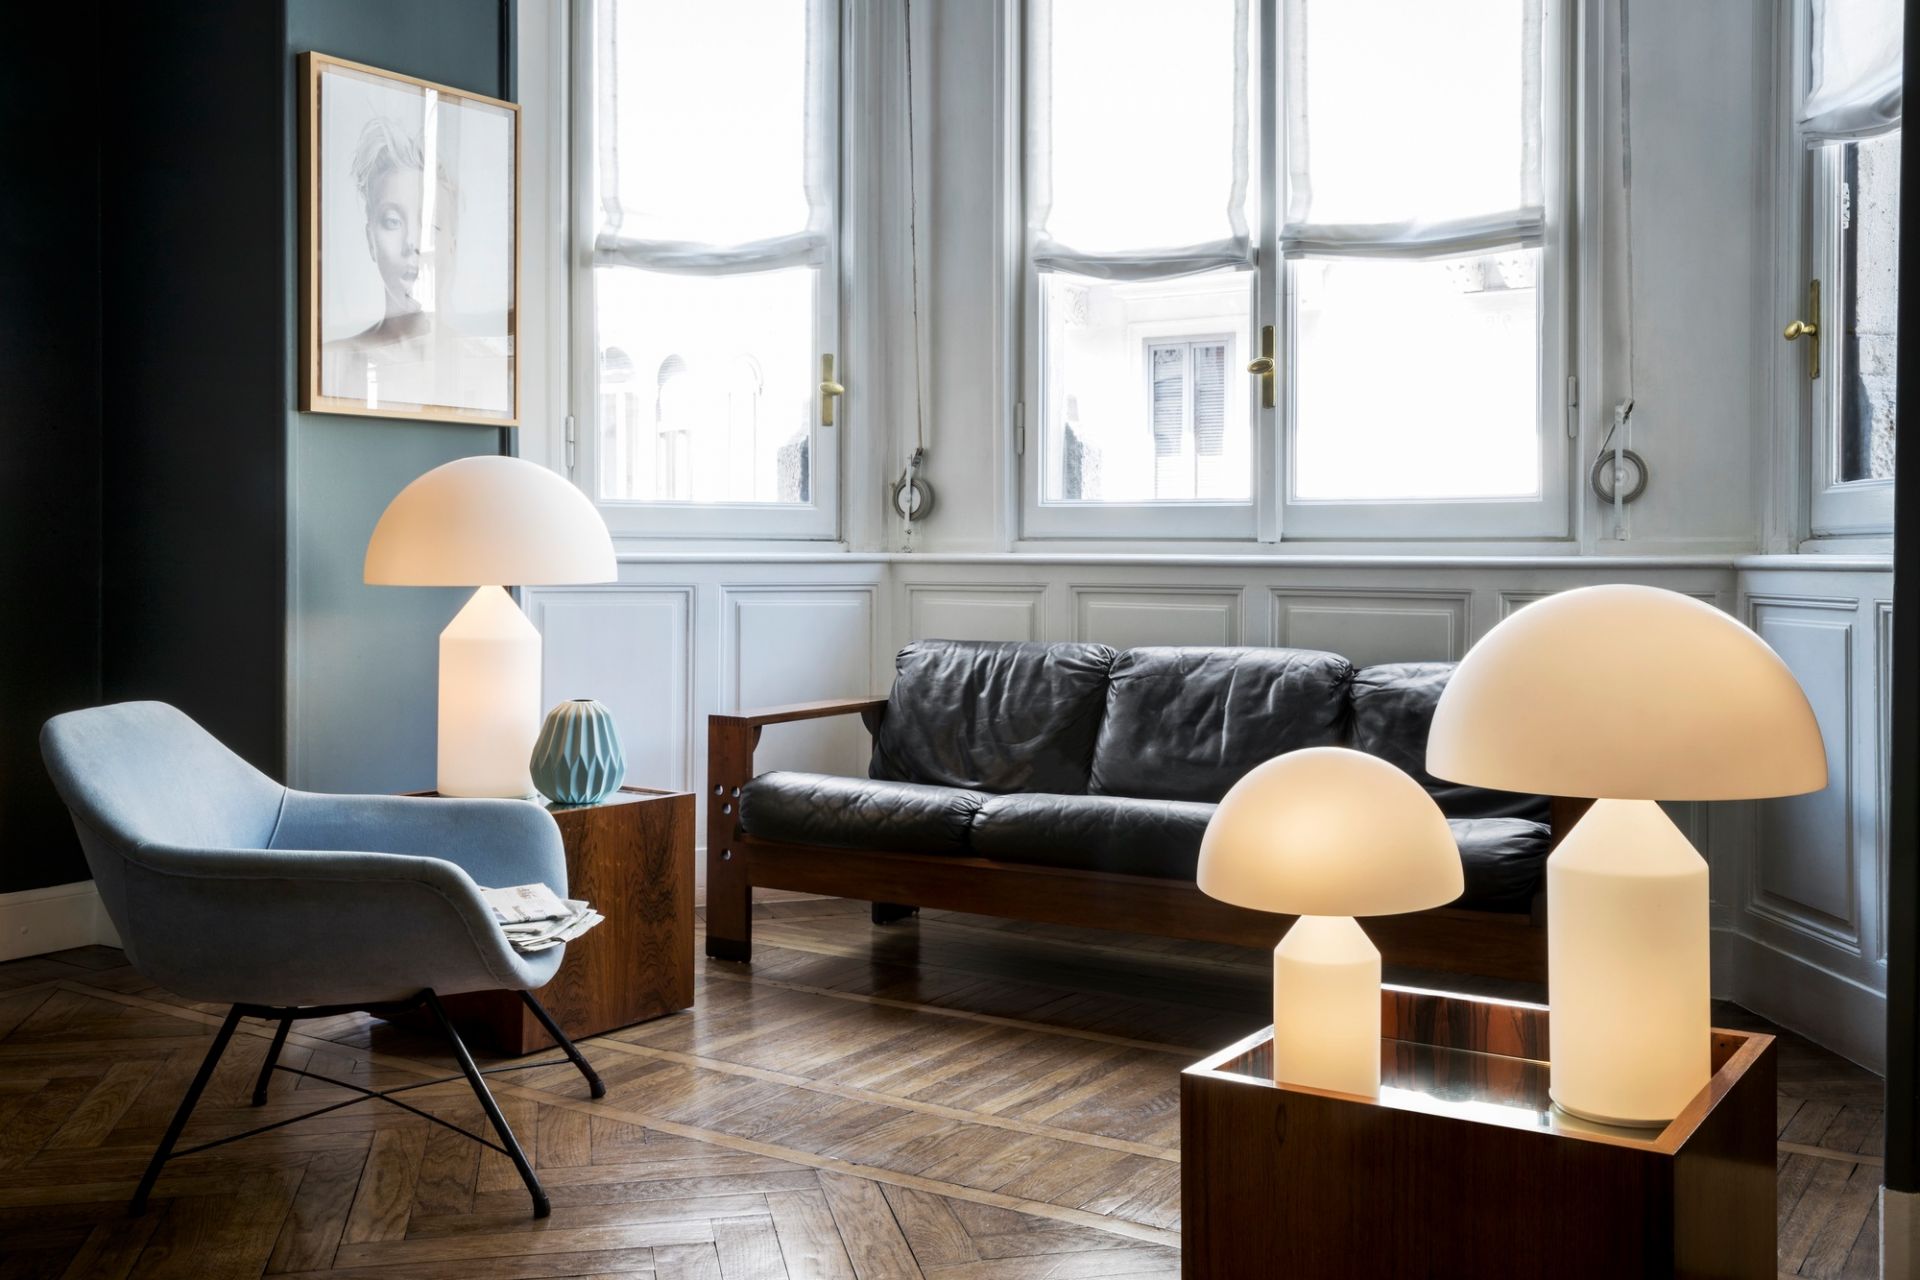 Super Bright Lamp For Living Room